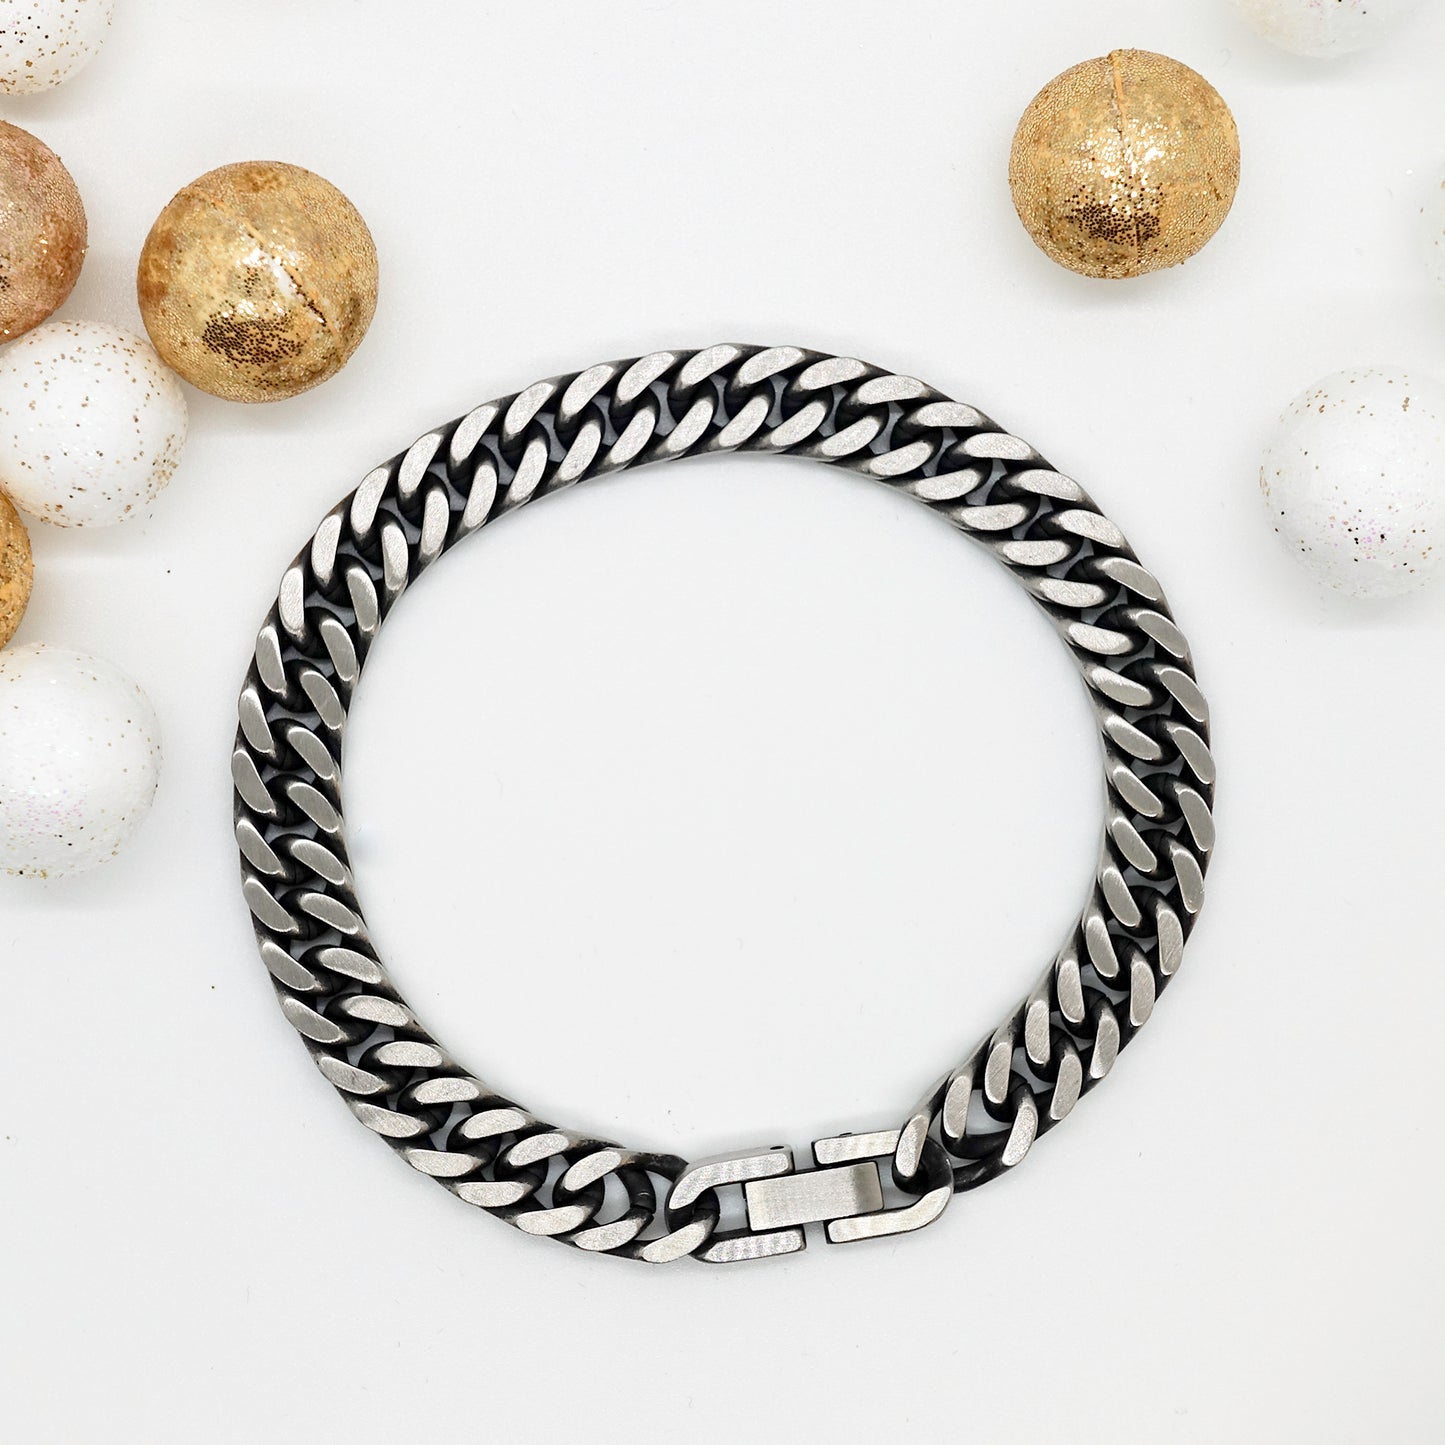 Gigi Cuban Link Chain Bracelet Engraved Heartfelt Gift for Birthday, Christmas, and Graduation